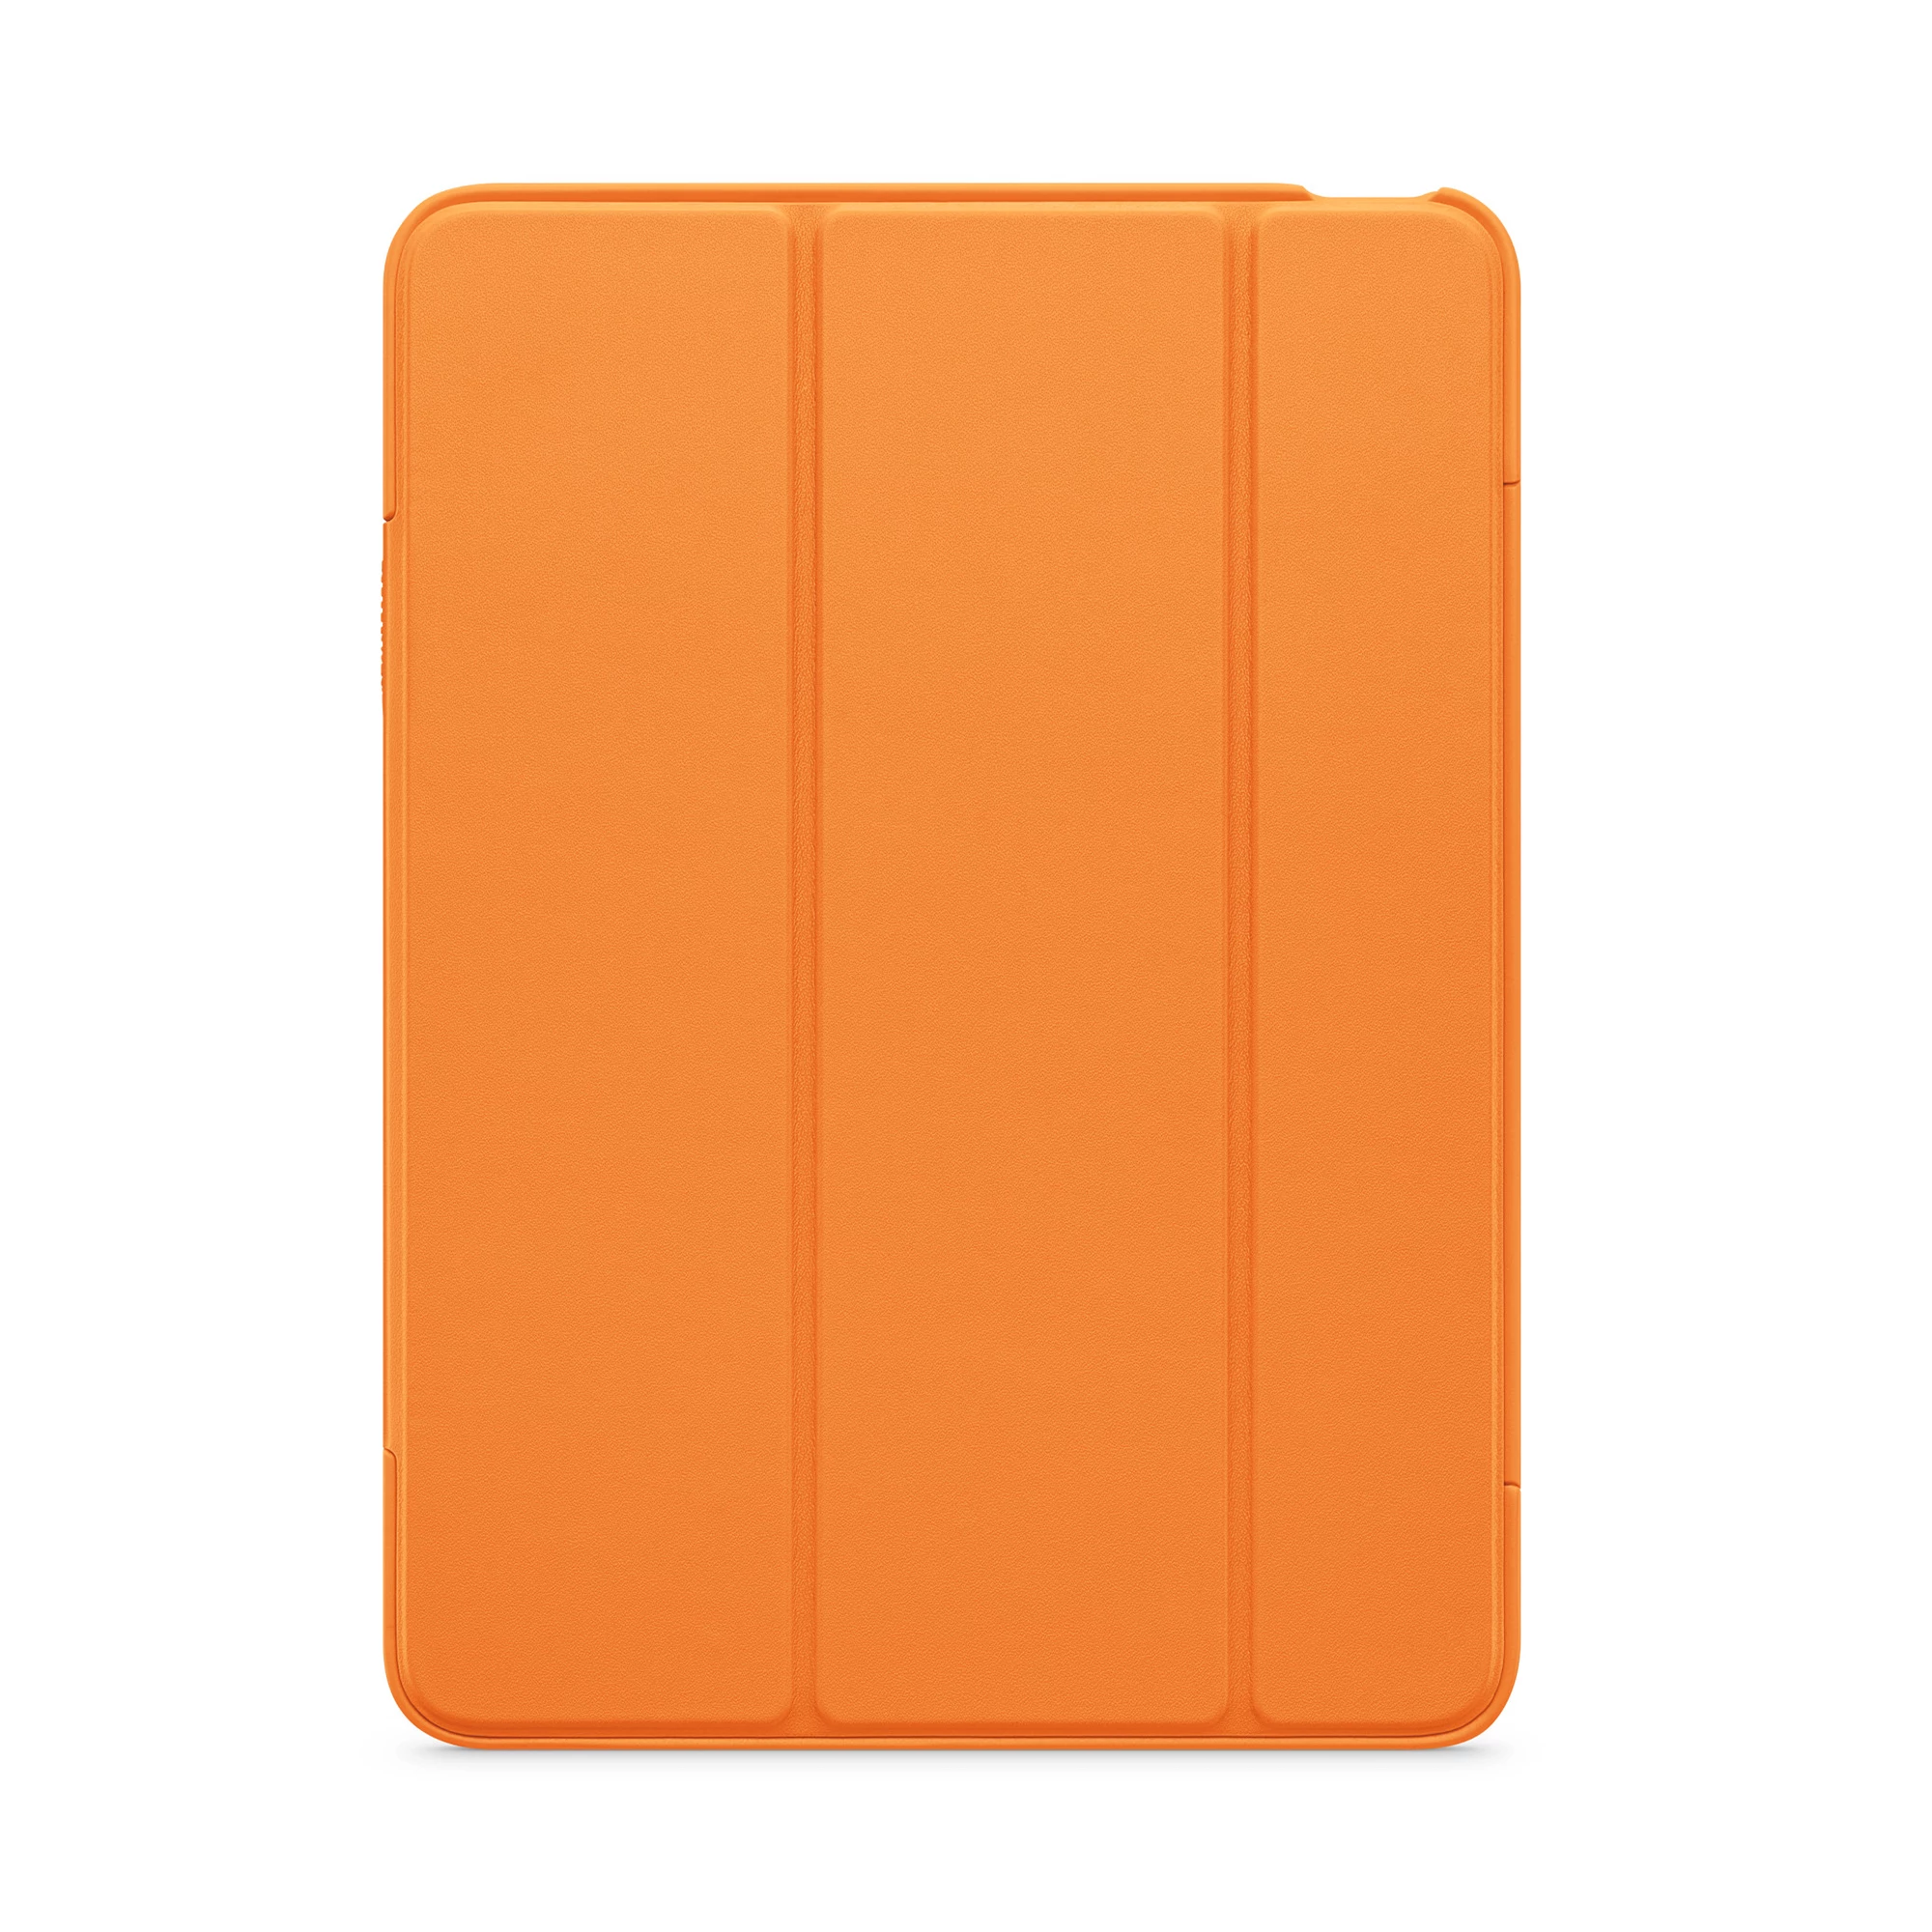 OtterBox Symmetry Series 360 Elite Case for iPad mini (6th generation) - Orange (HPYZ2)